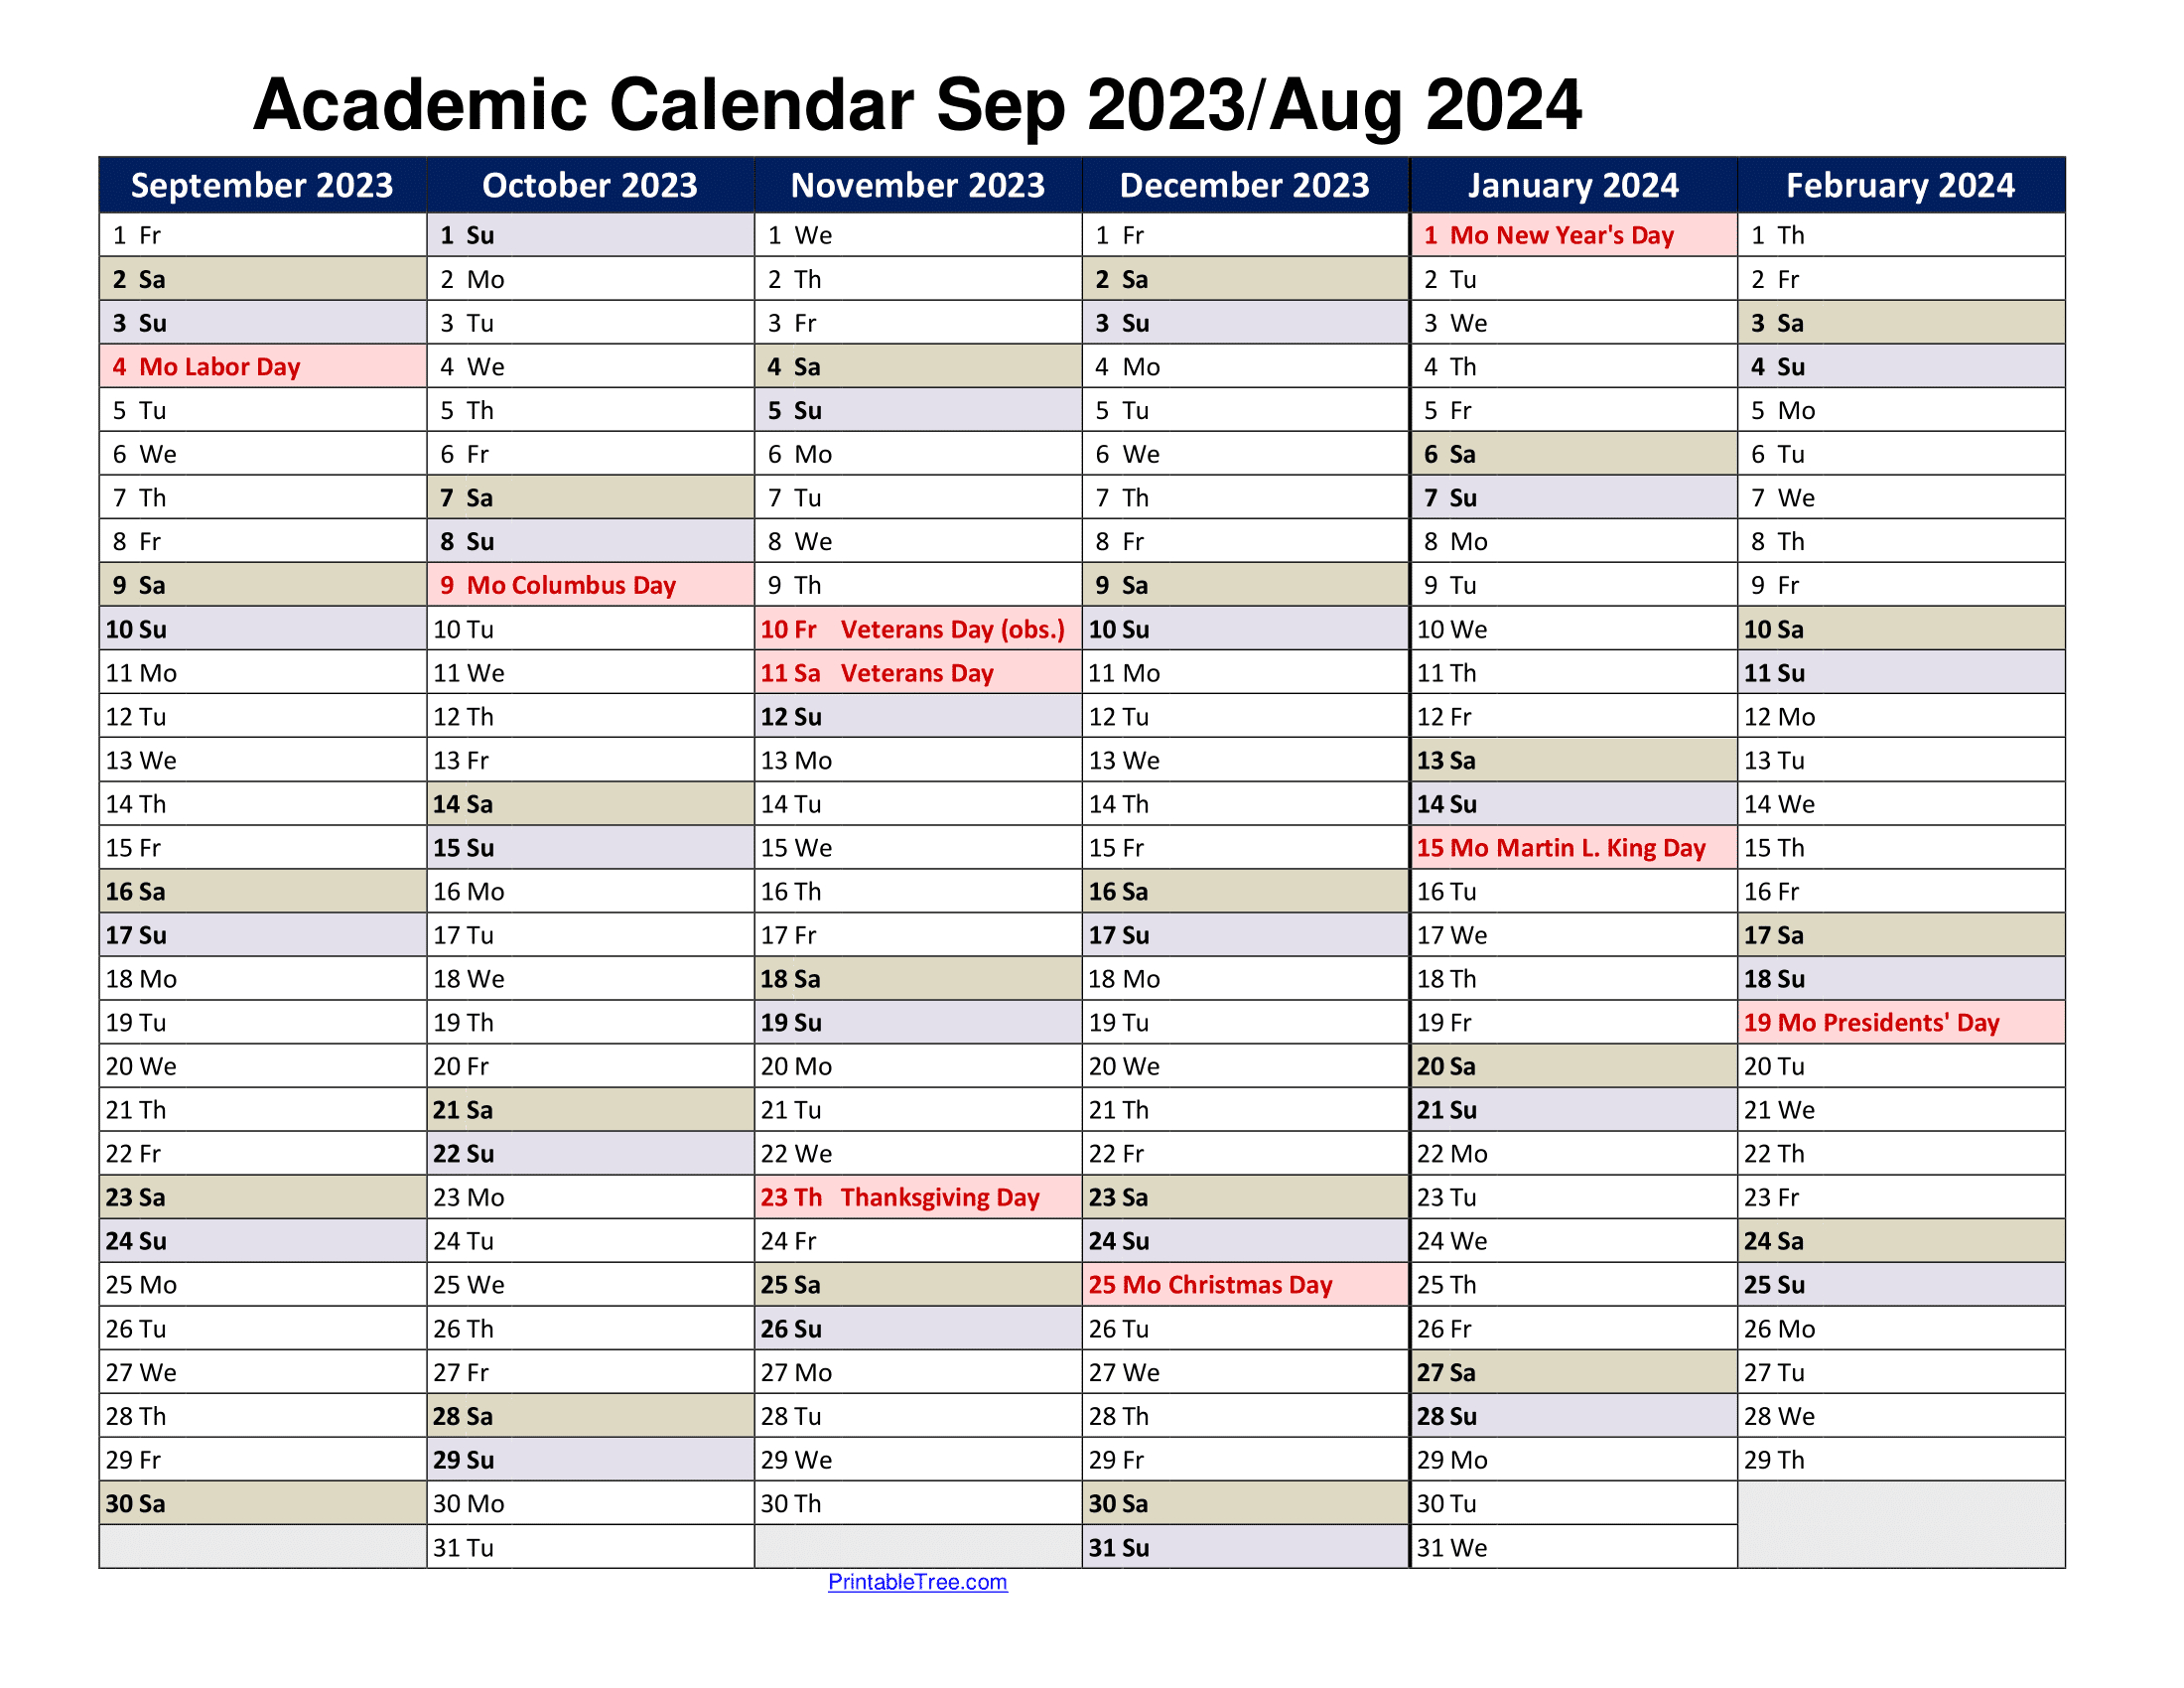 Free Printable Academic Calendar 2023 To 2024 Templates | 2023 Calendar 2024 Printable Editable